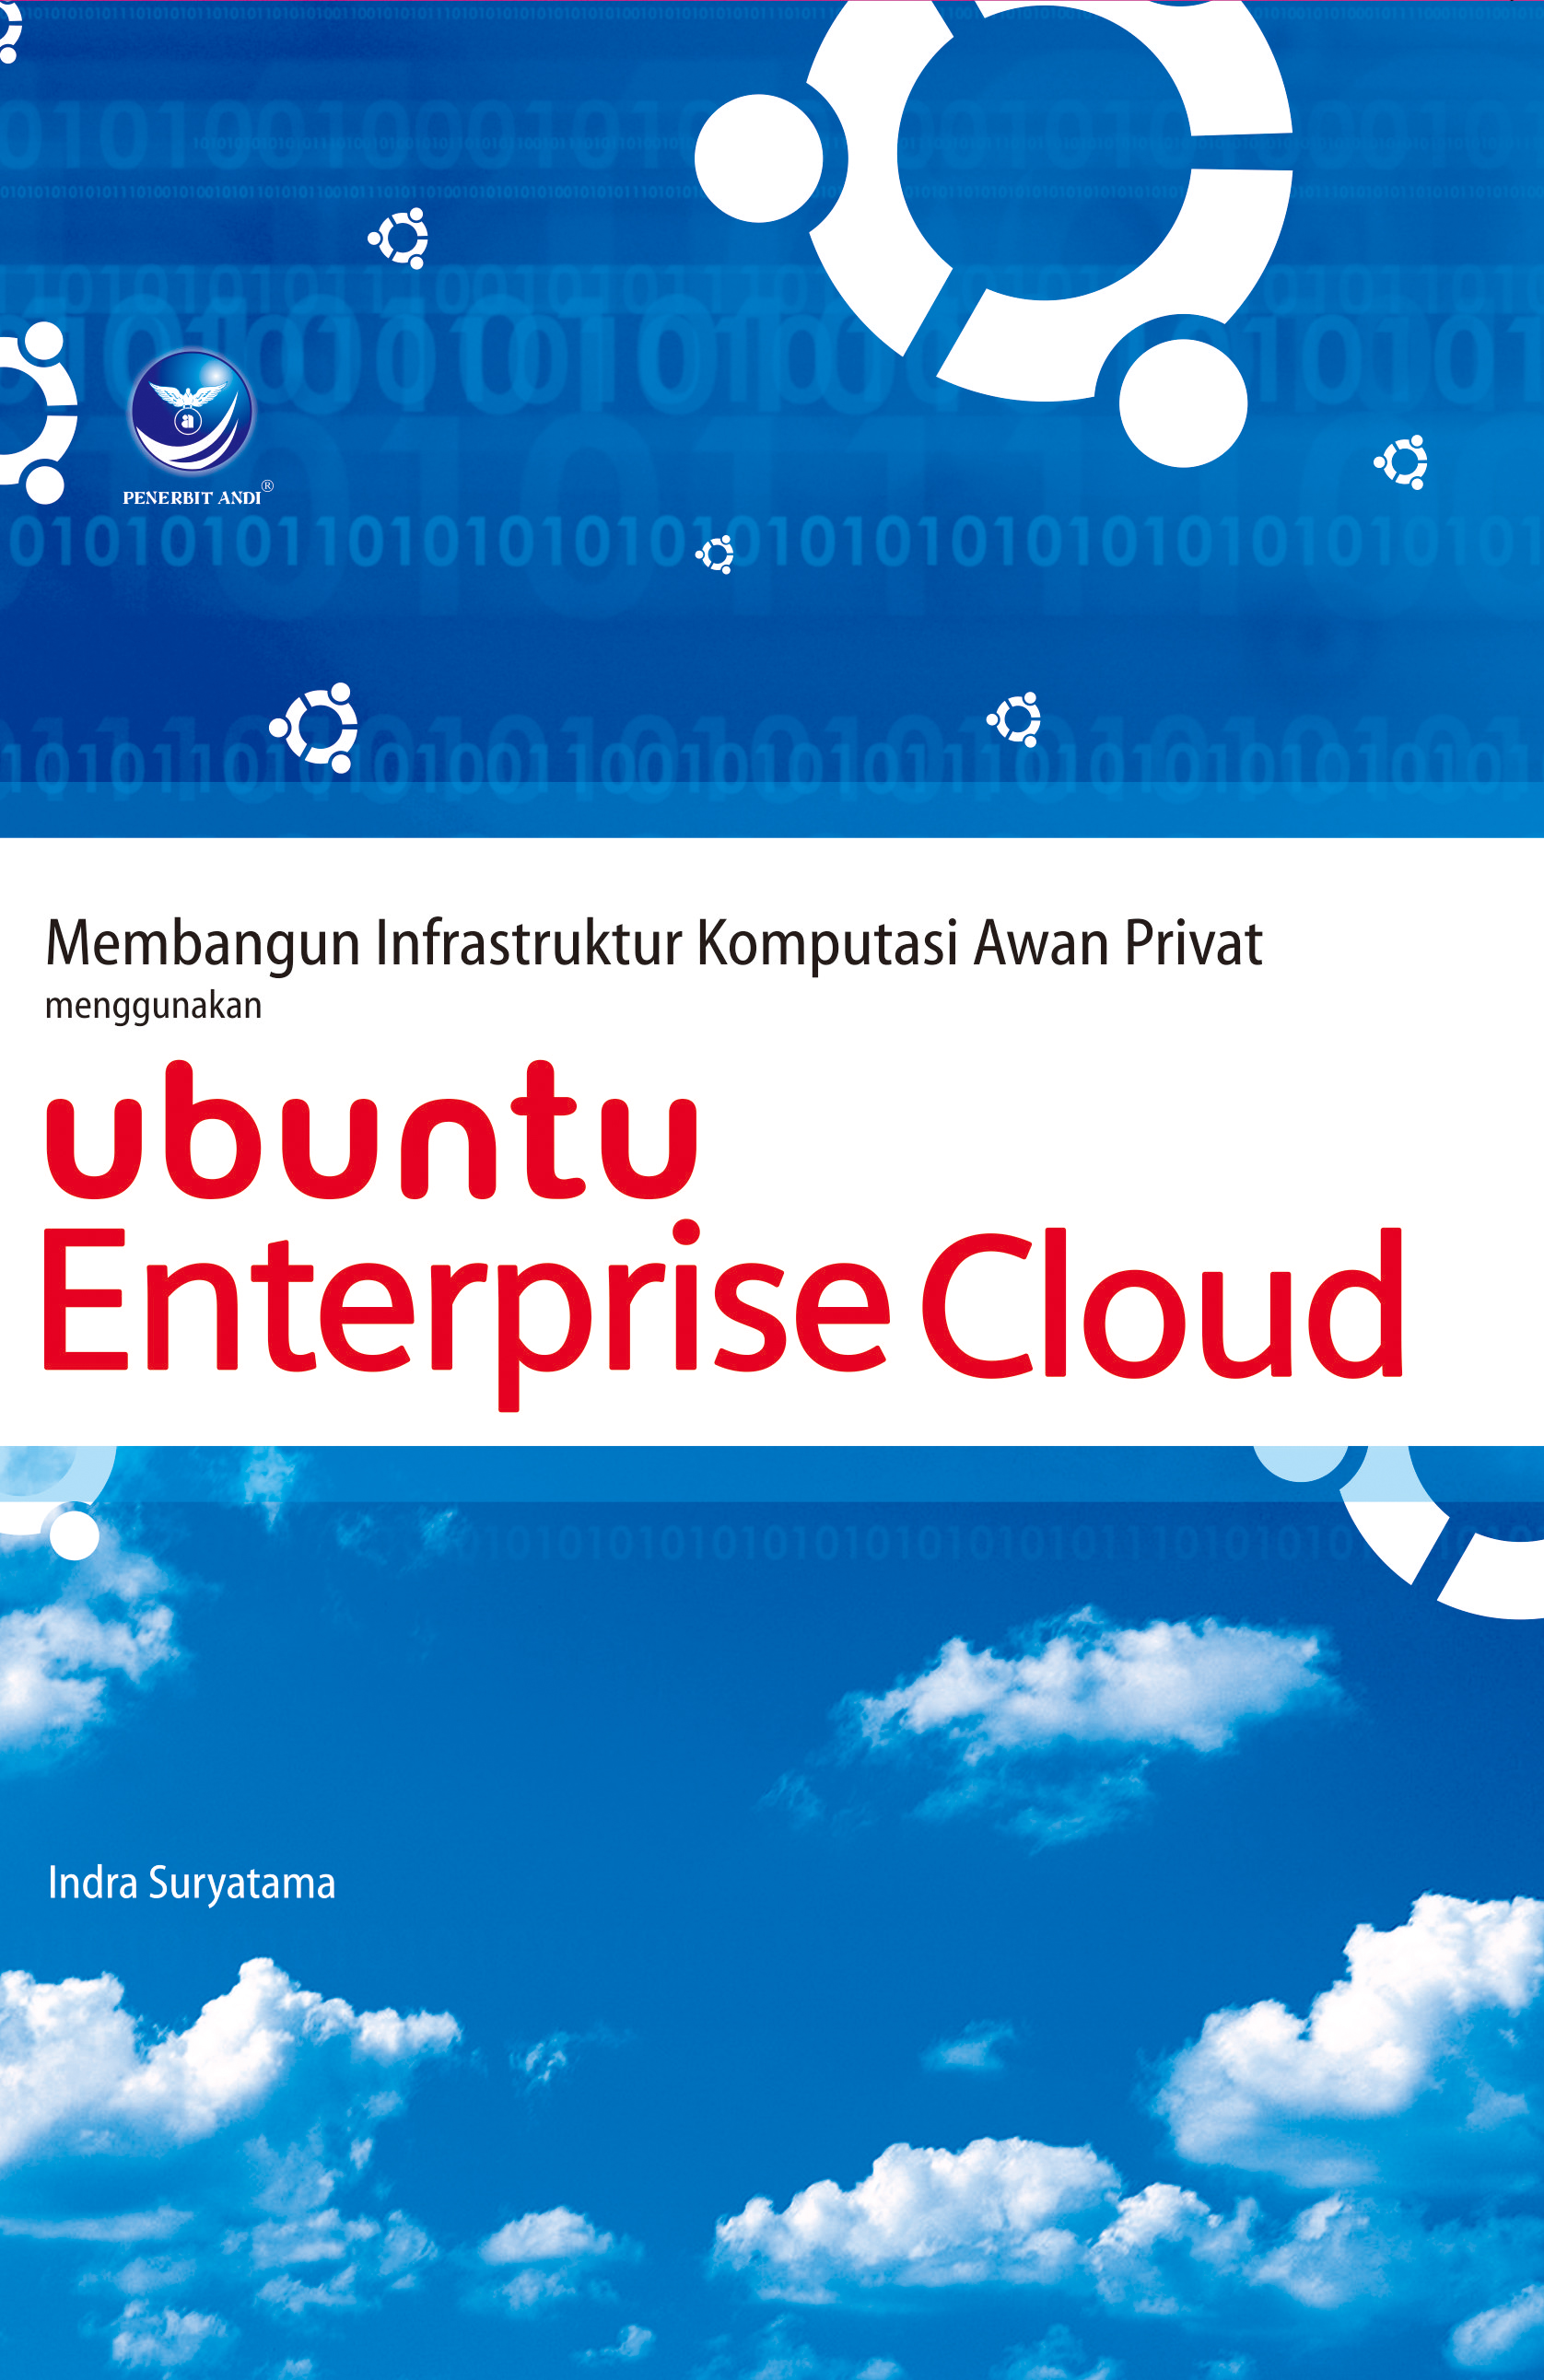 Membangun infrastruktur komputasi awan privat menggunakan ubuntu enterprise cloud [sumber elektronis]